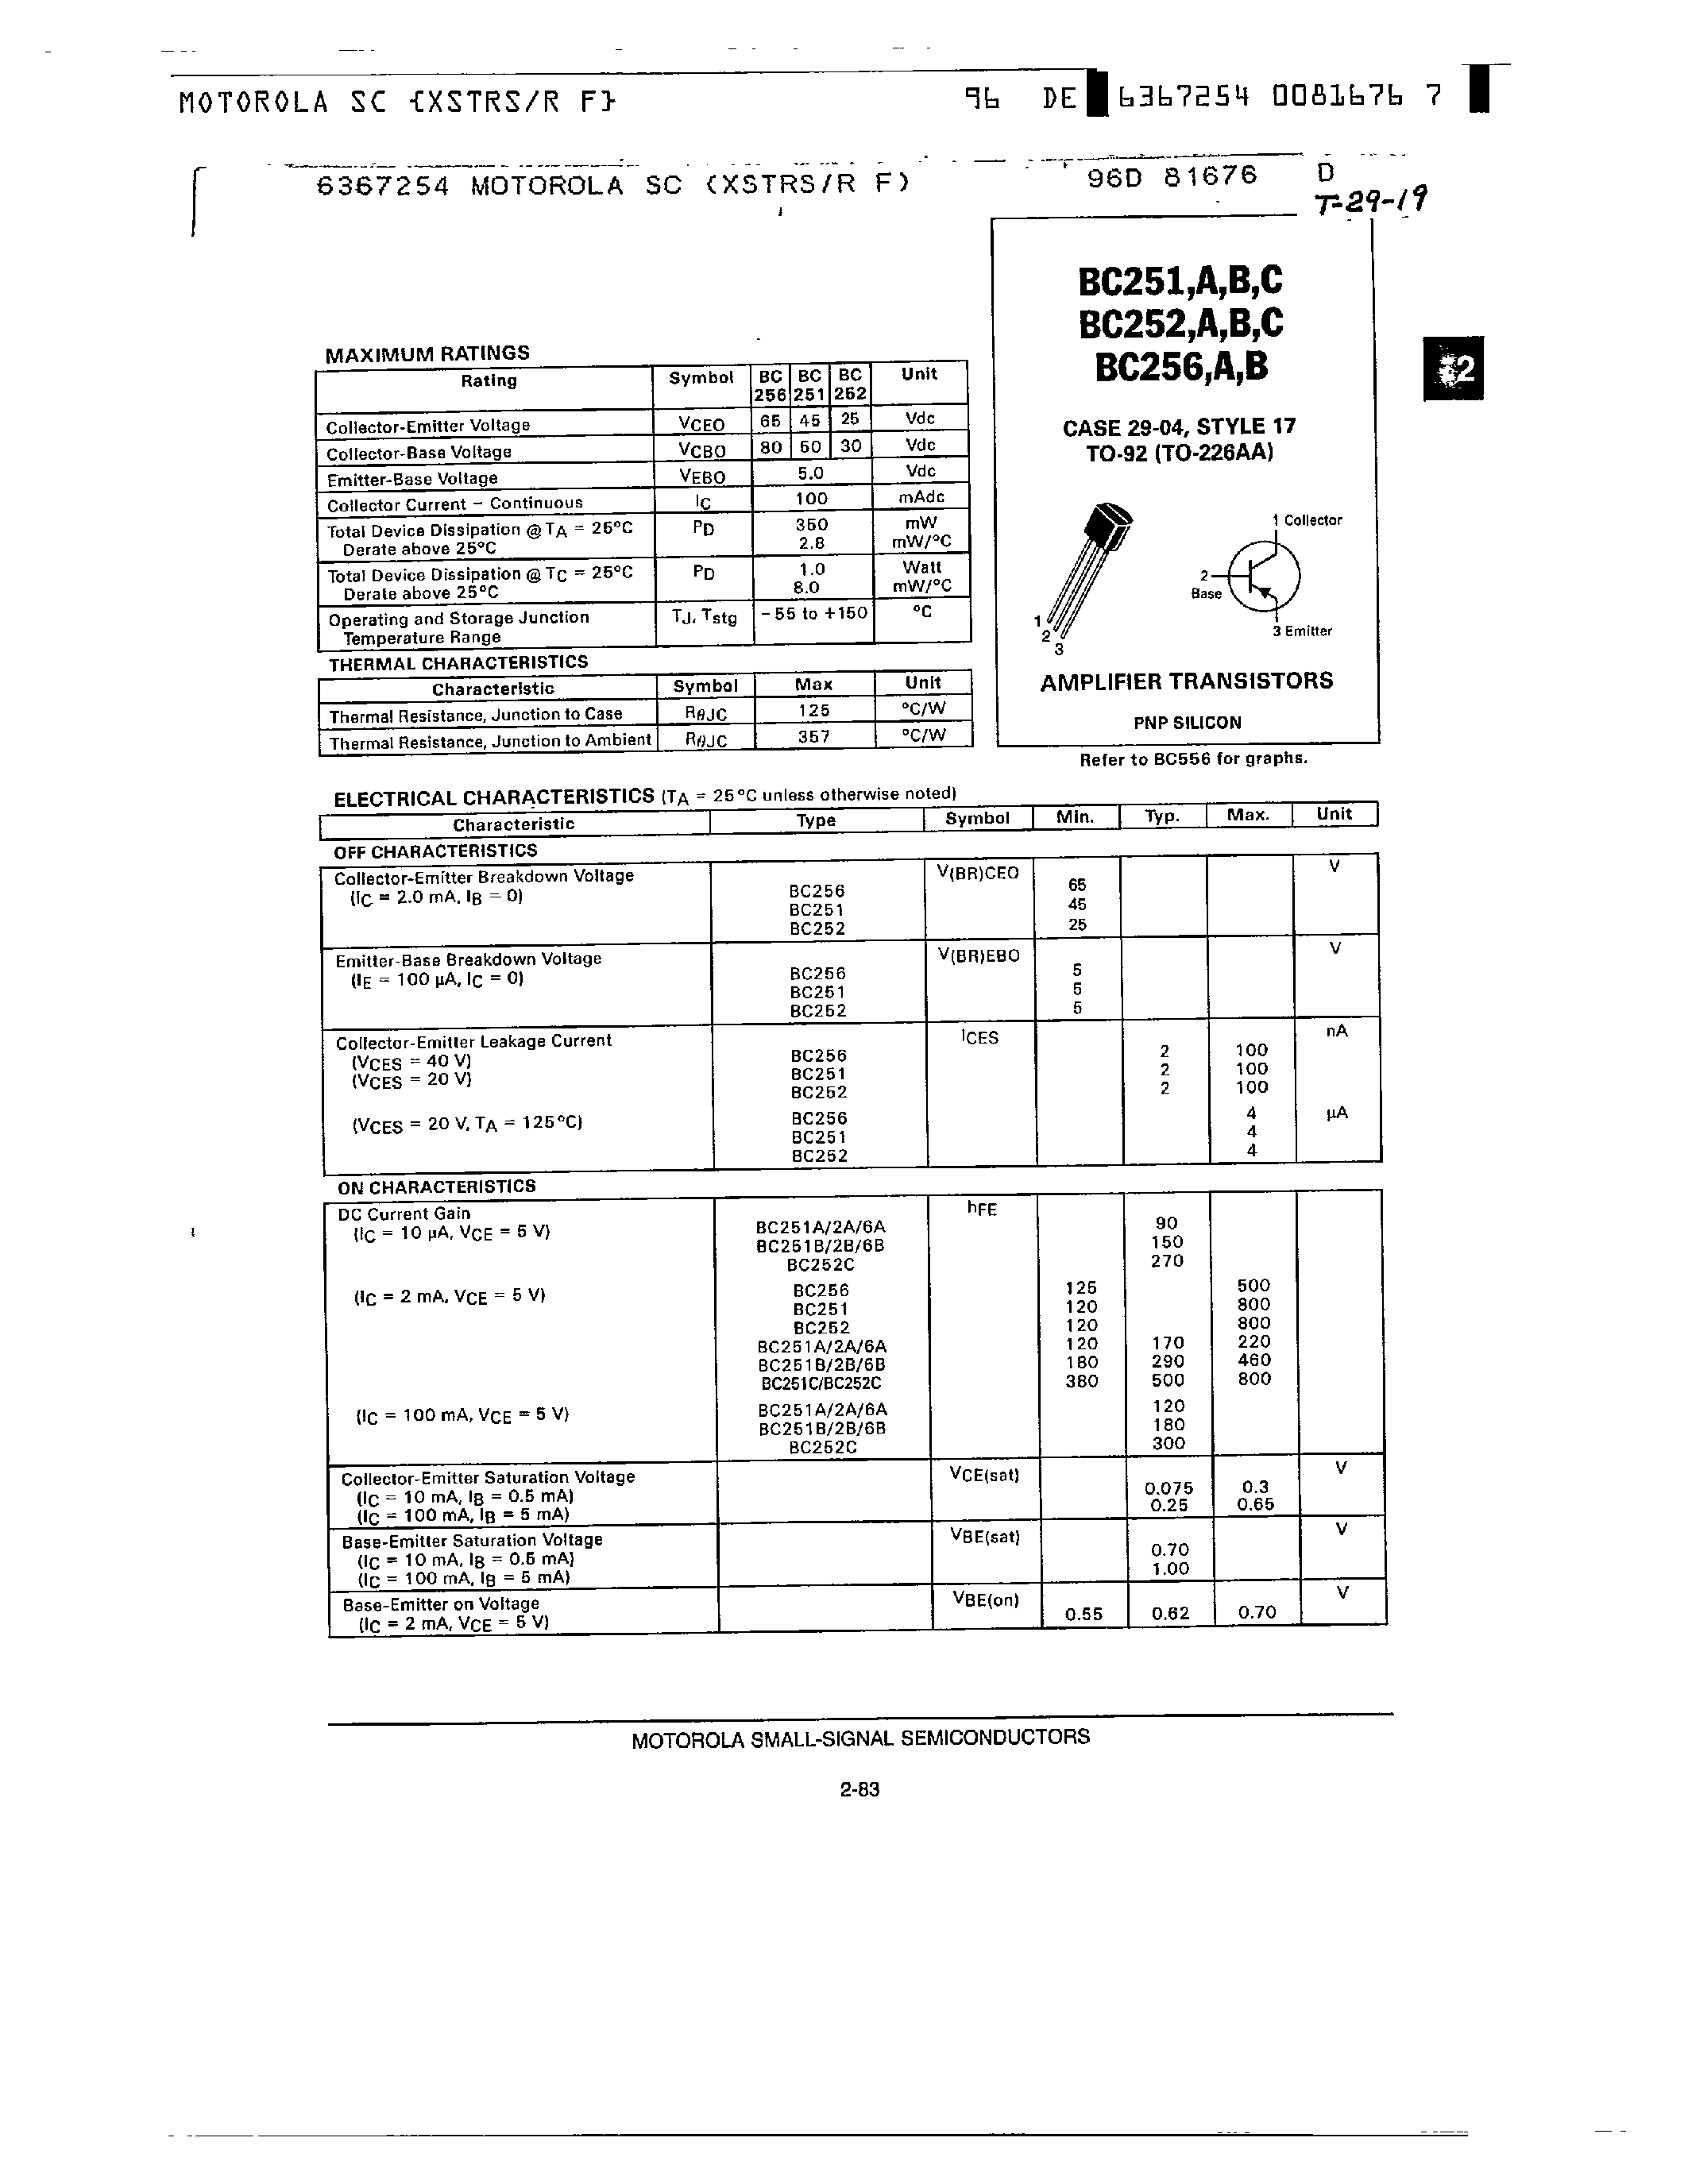 Datasheet BC256B - AMPLIFIER TRANSISTORS PNP SILICON page 1